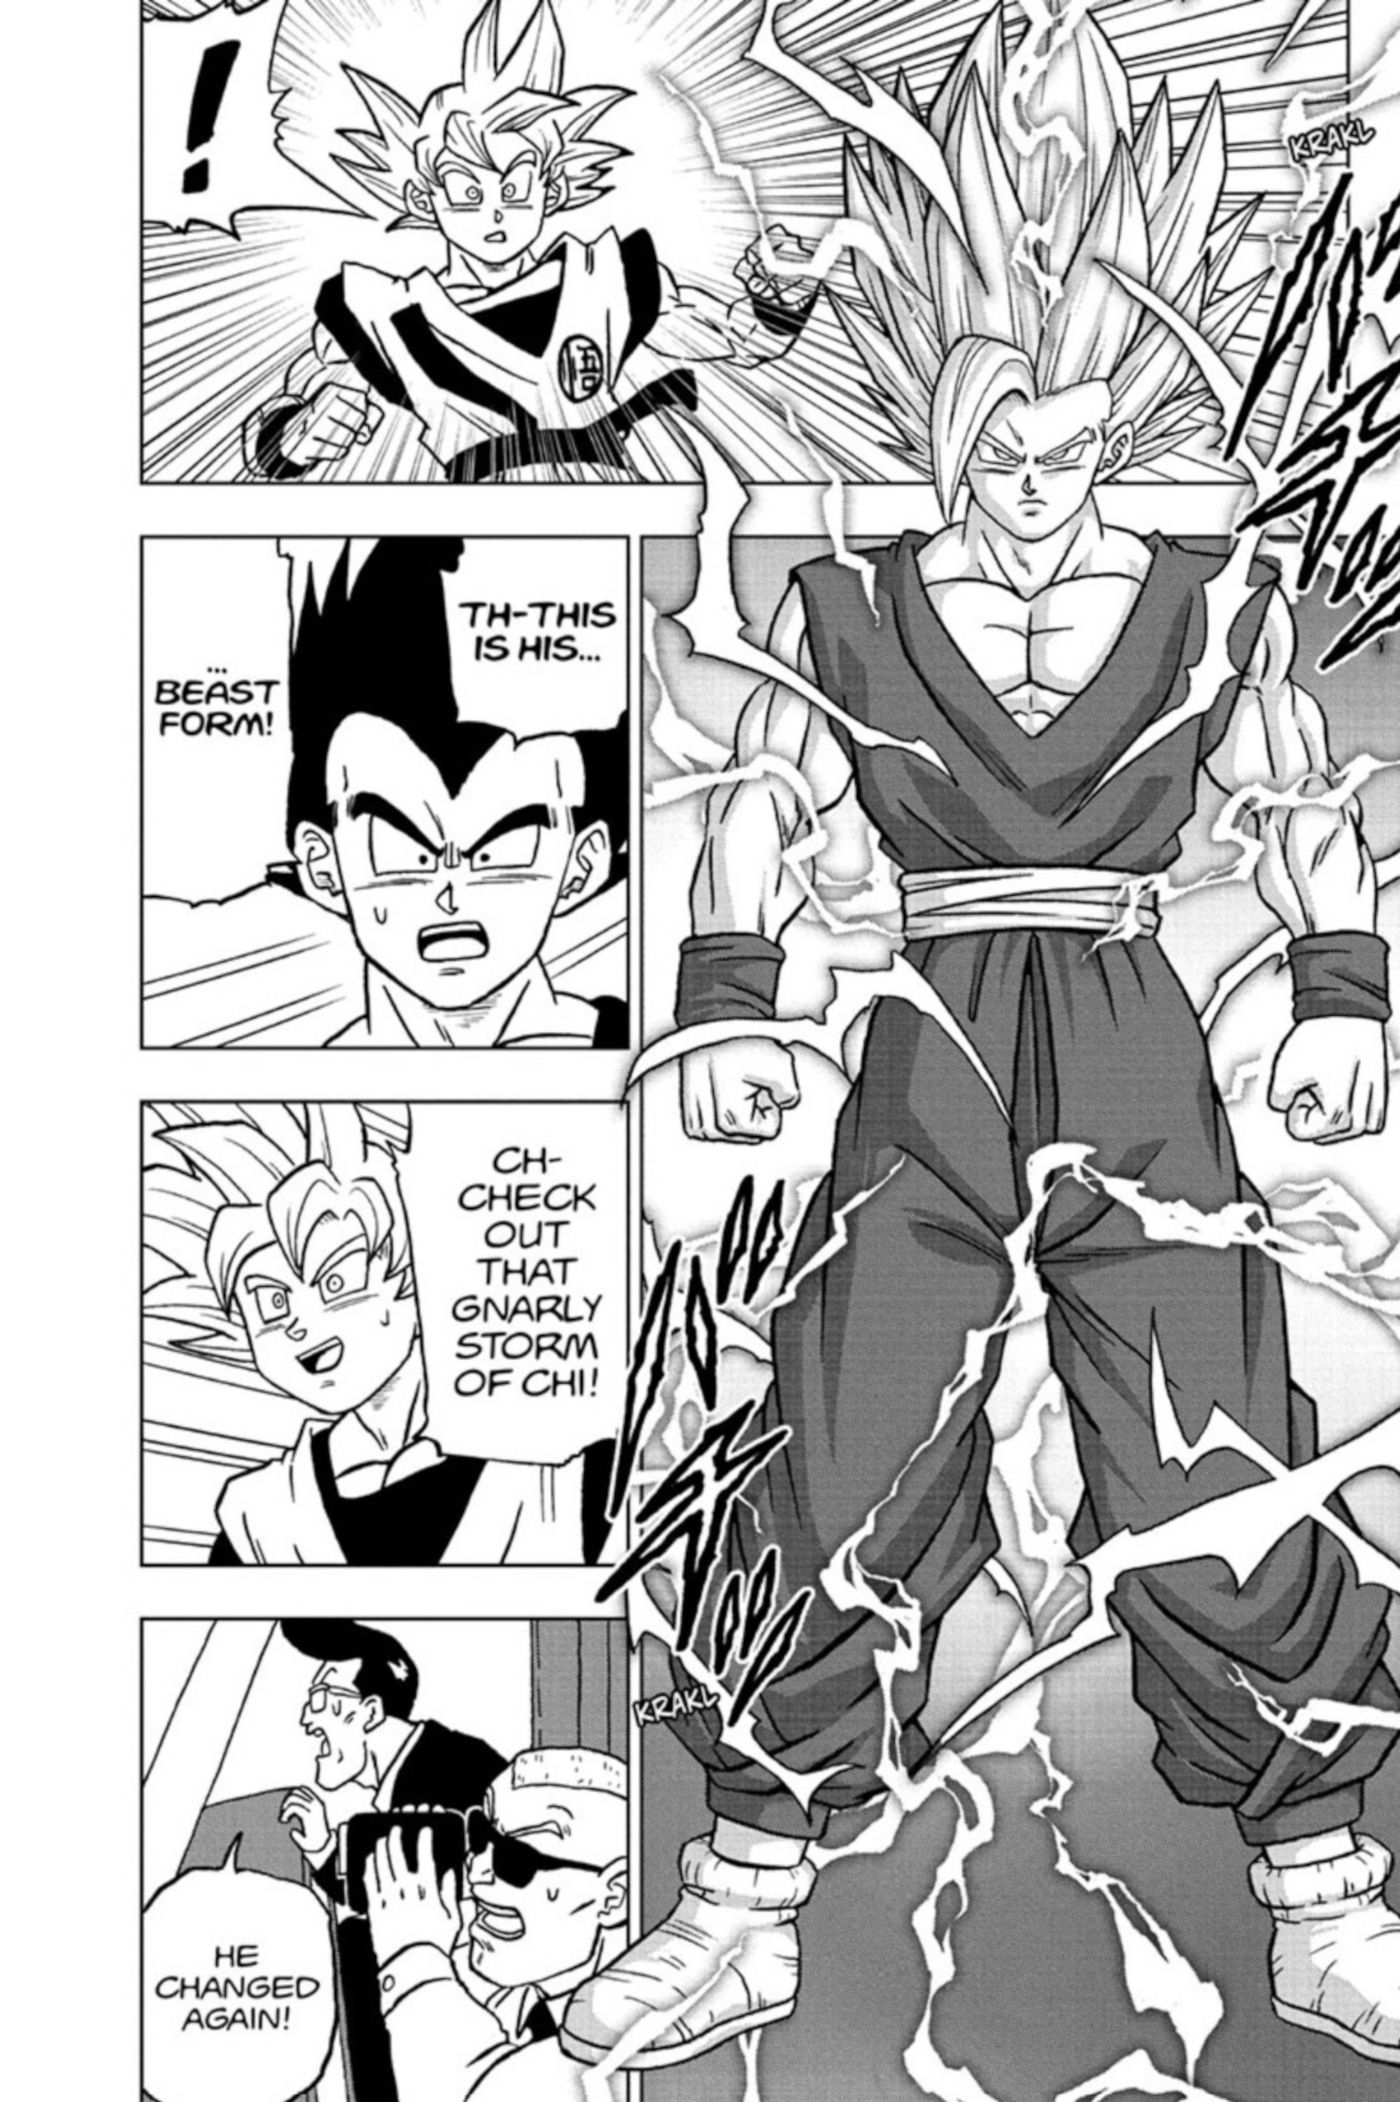 Scares Goku & Vegeta – Gohan’s New Dragon Ball Super Form Earns Impressive Achievement